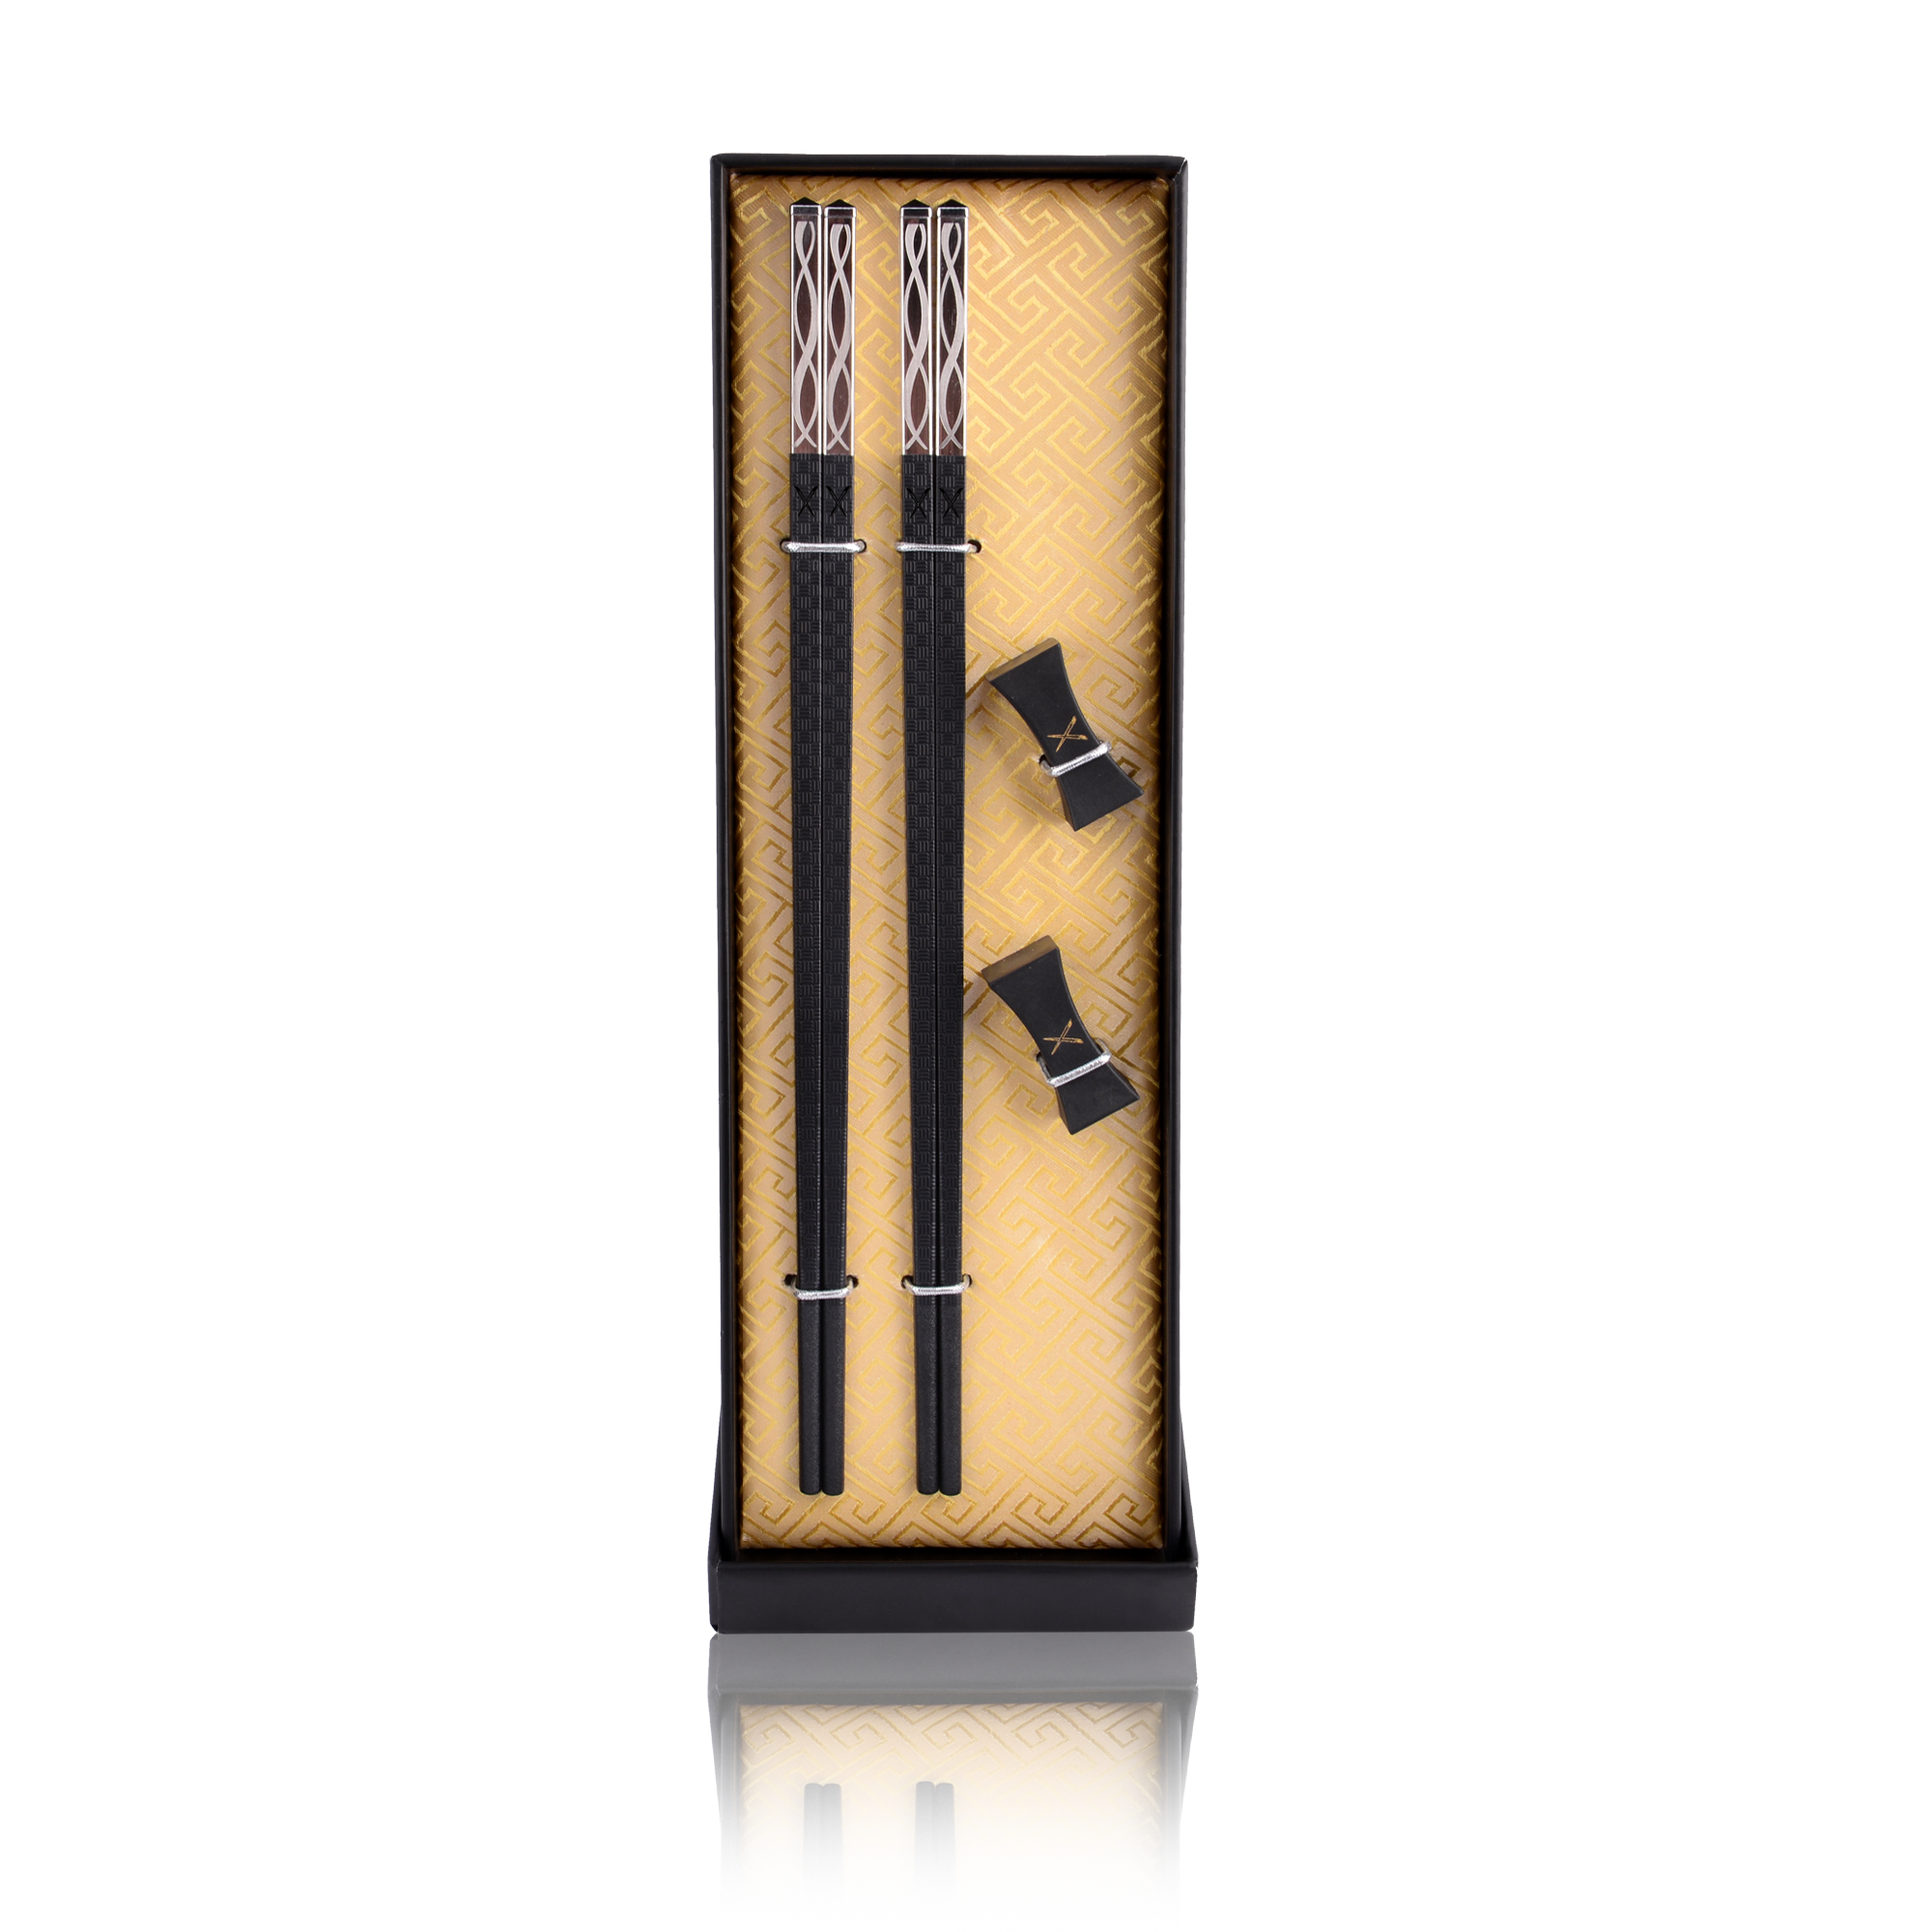 Luxury Chopsticks and Modern Chopstick Sets Gift